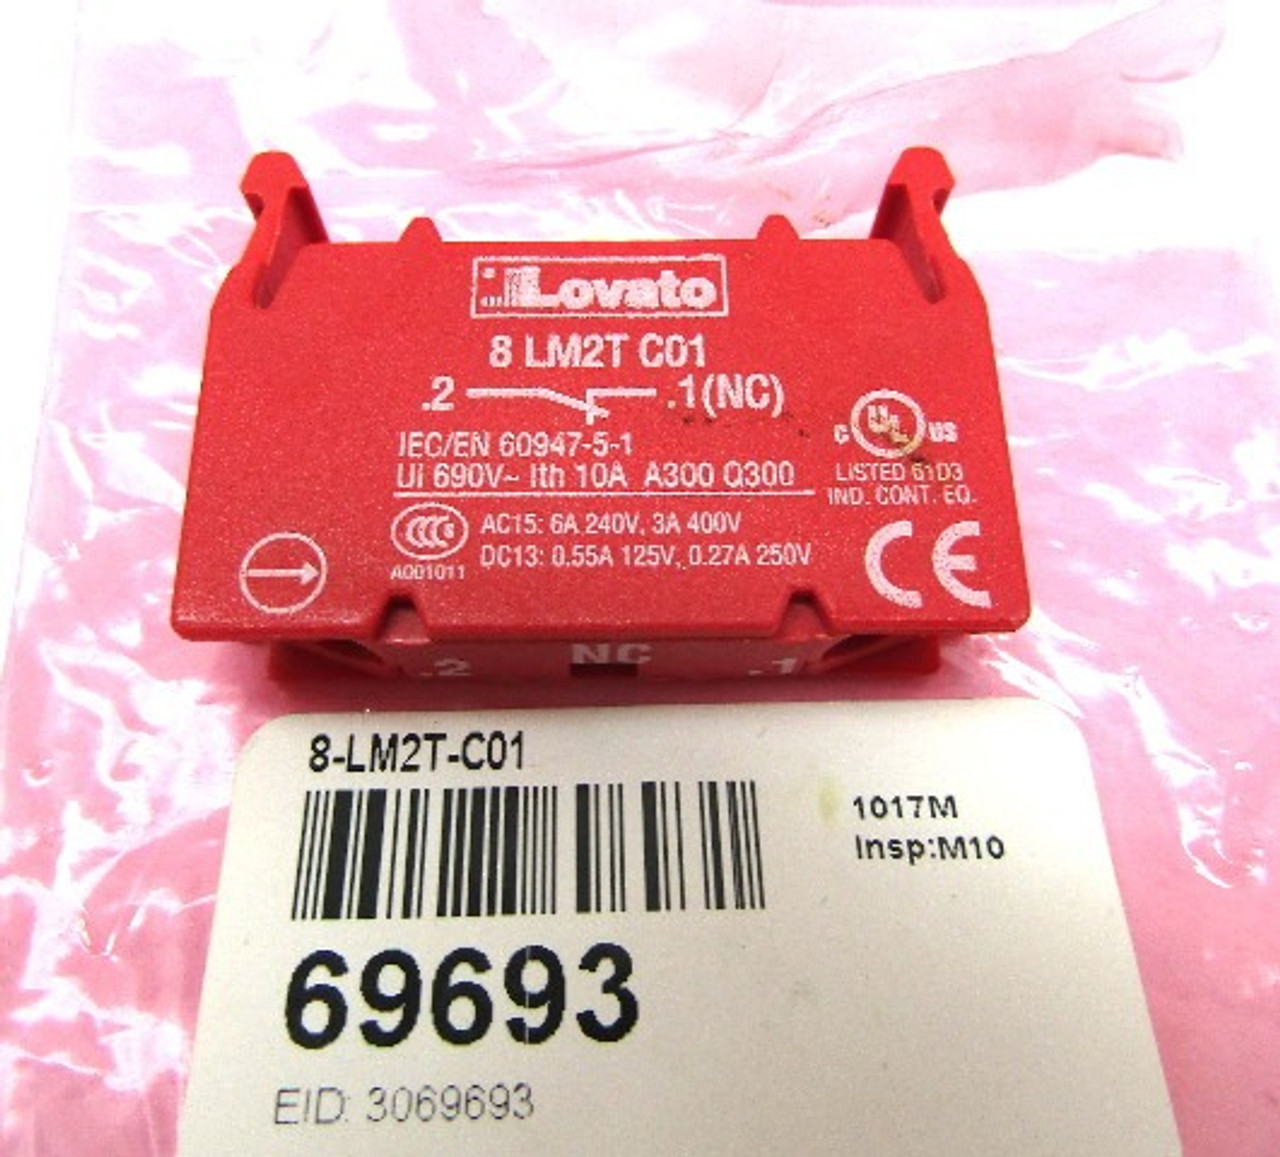 LOVATO 8-LM2T-C01 Contact Block 69693 10 Amp 240-690 Volt